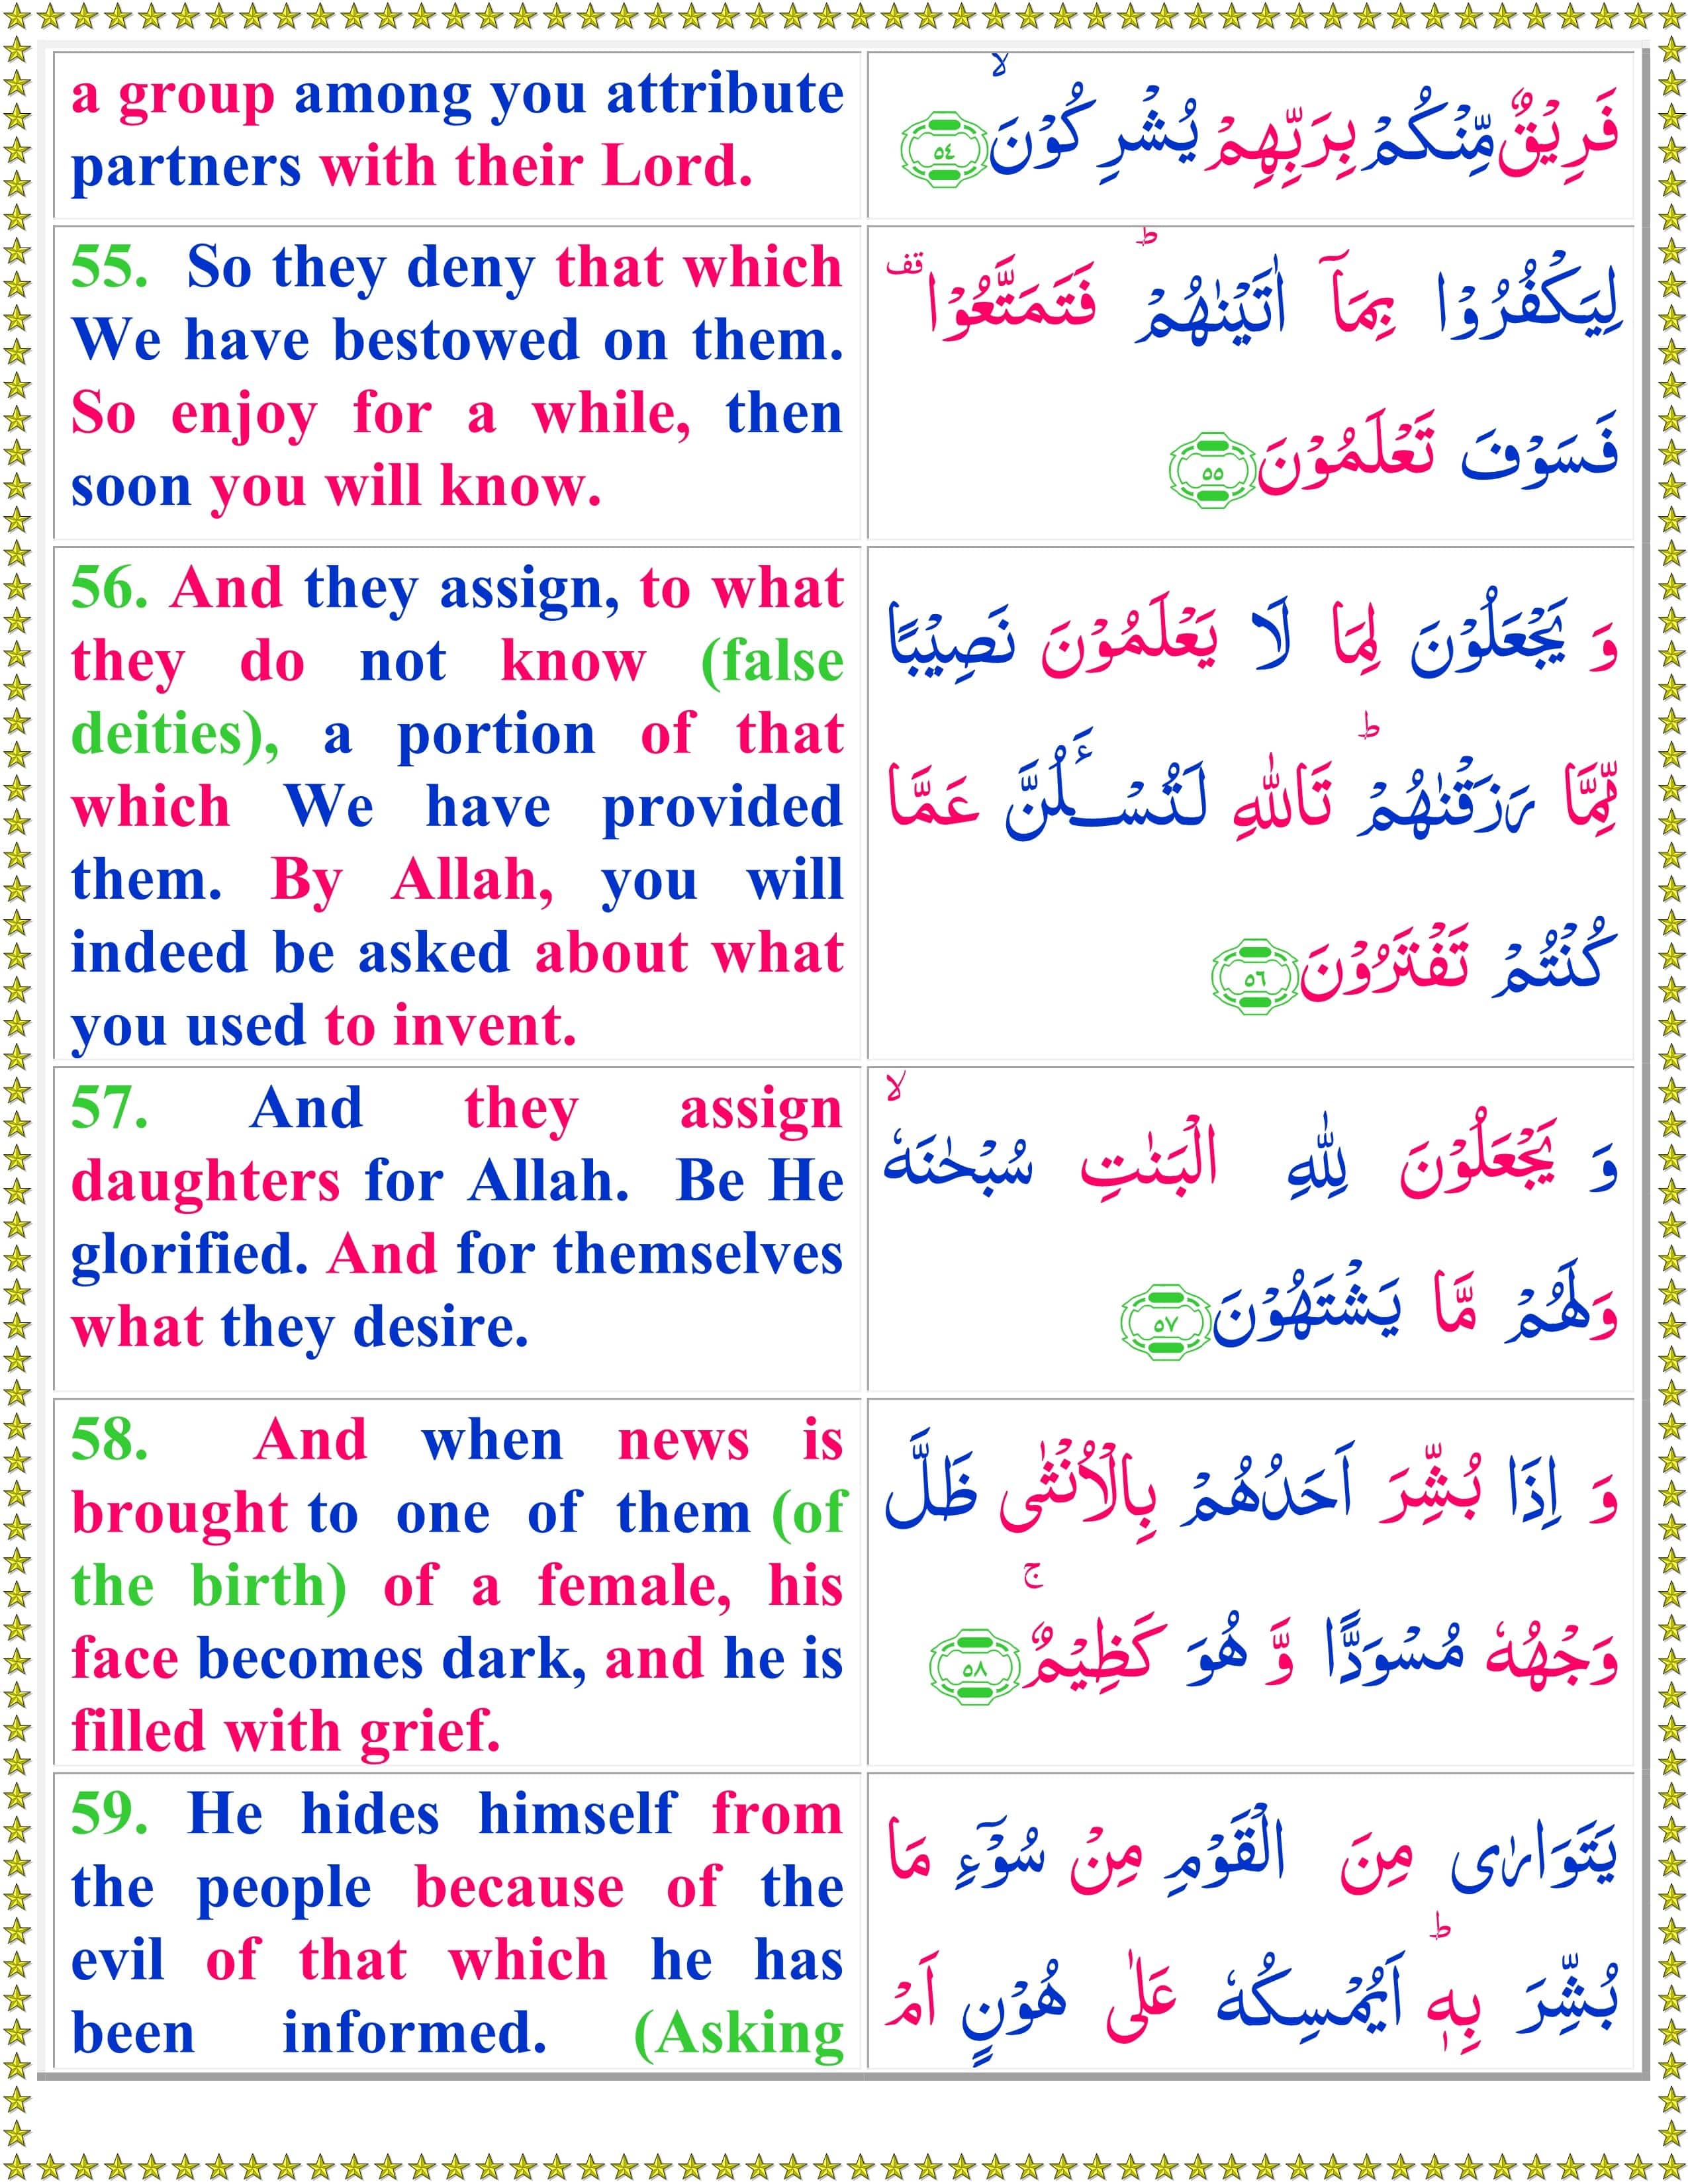 Surah Al Nahl with English Translation